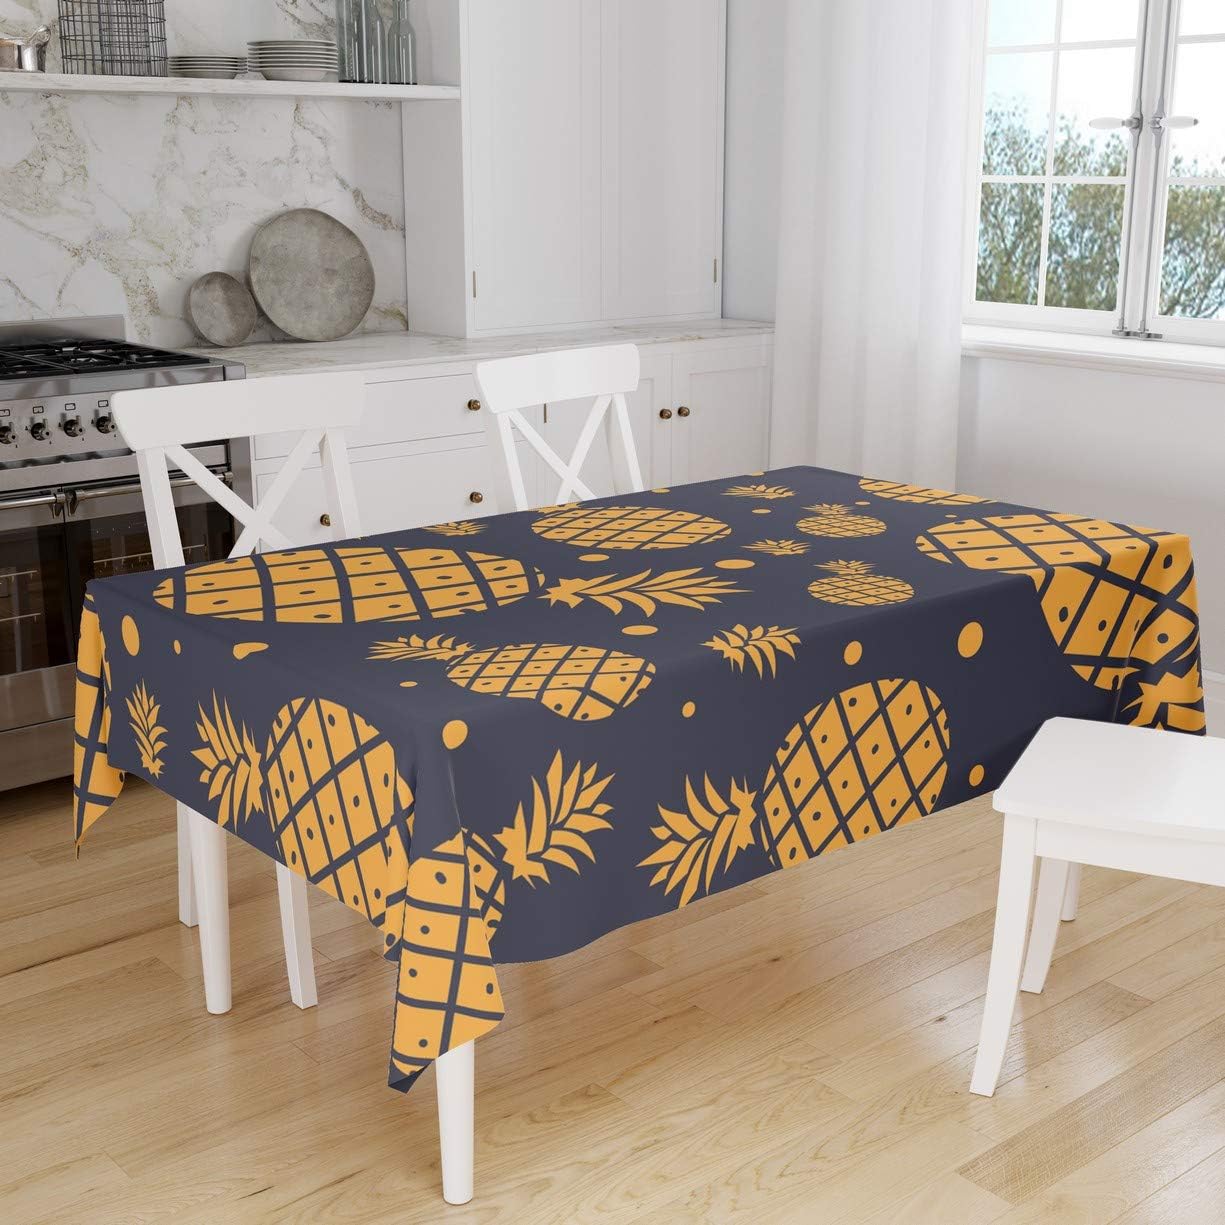 Bonamaison Orange Pineapple Design Black Tablecloth 140 x 160cm RRP £26.44 CLEARANCE XL £16.99